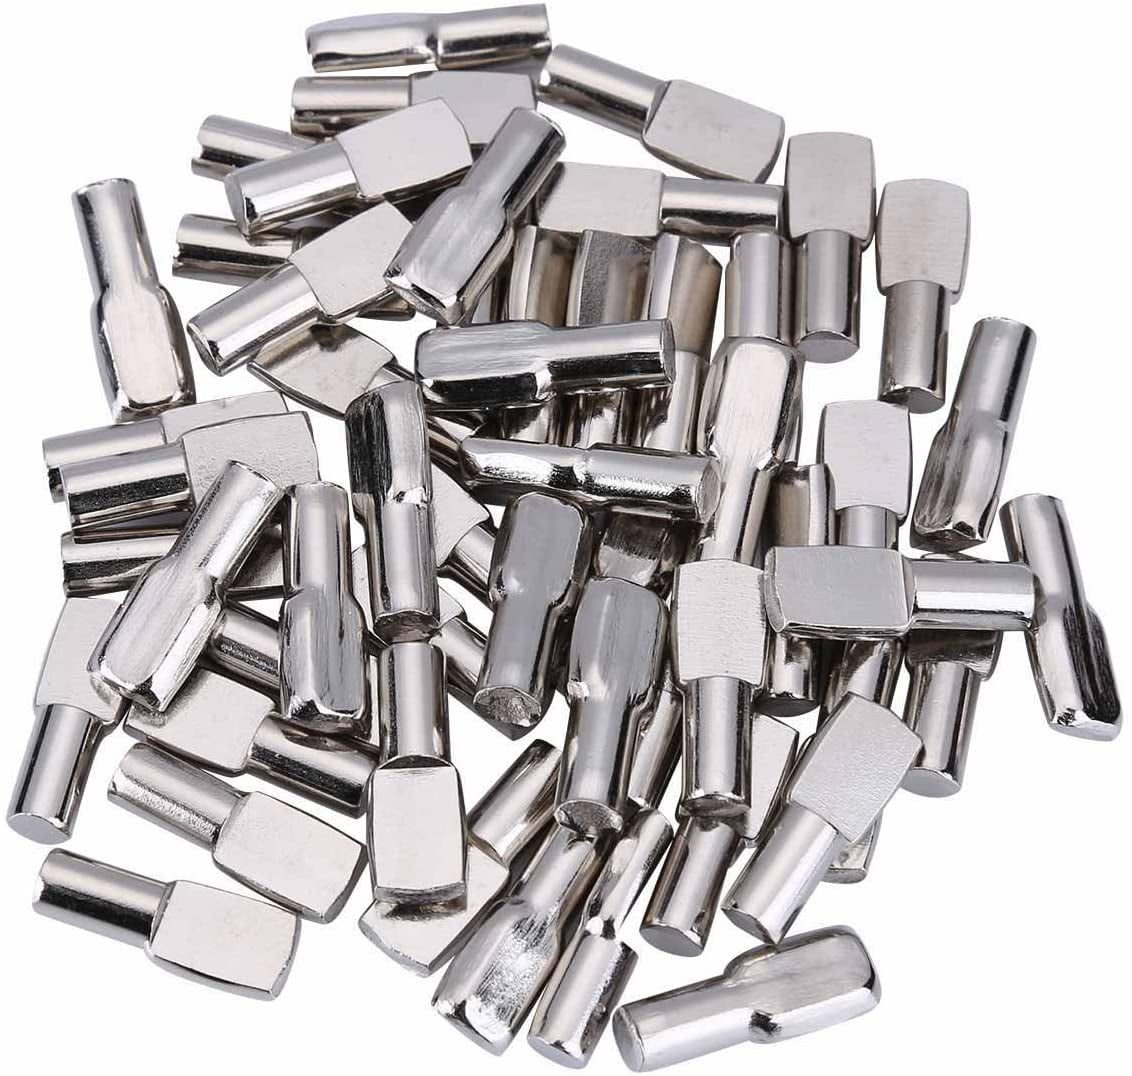 120 Packs Shelf Pins, 5mm Shelf Support Pegs Spoon Shape Cabinet Furniture Tbestmax